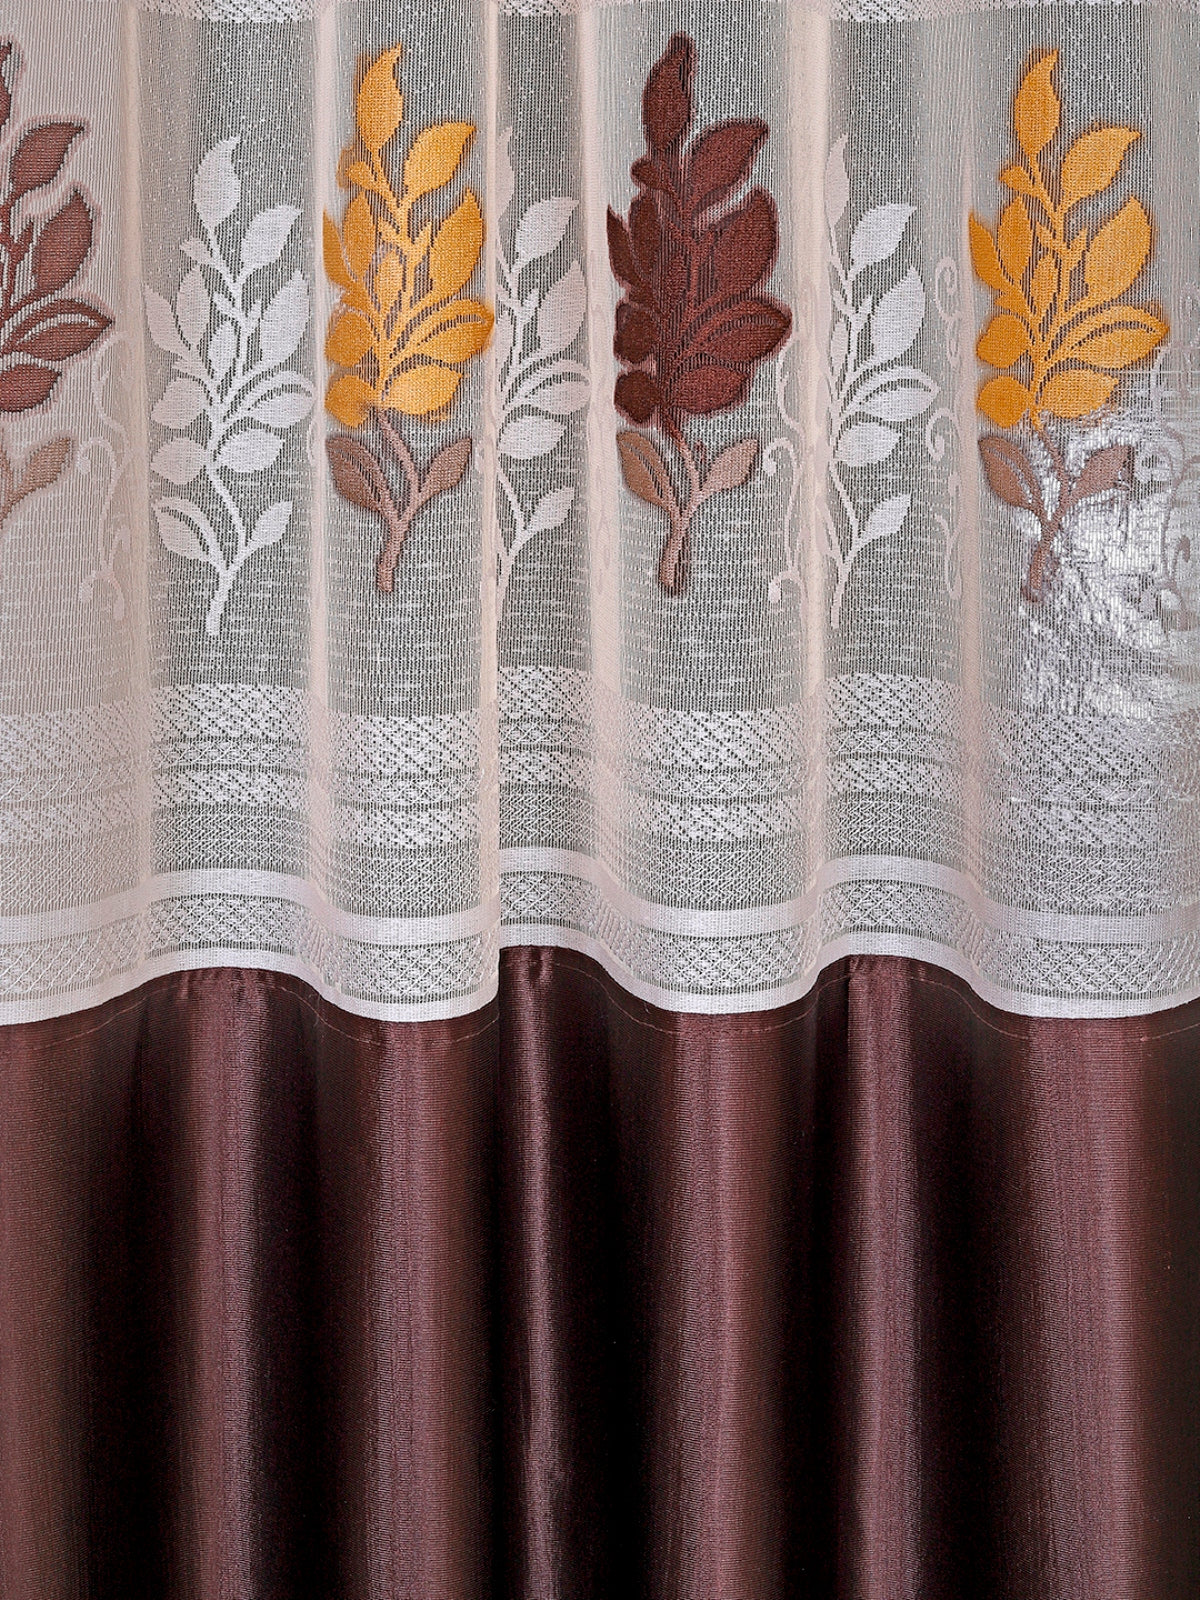 Romee Brown Floral Patterned Set of 2 Long Door Curtains